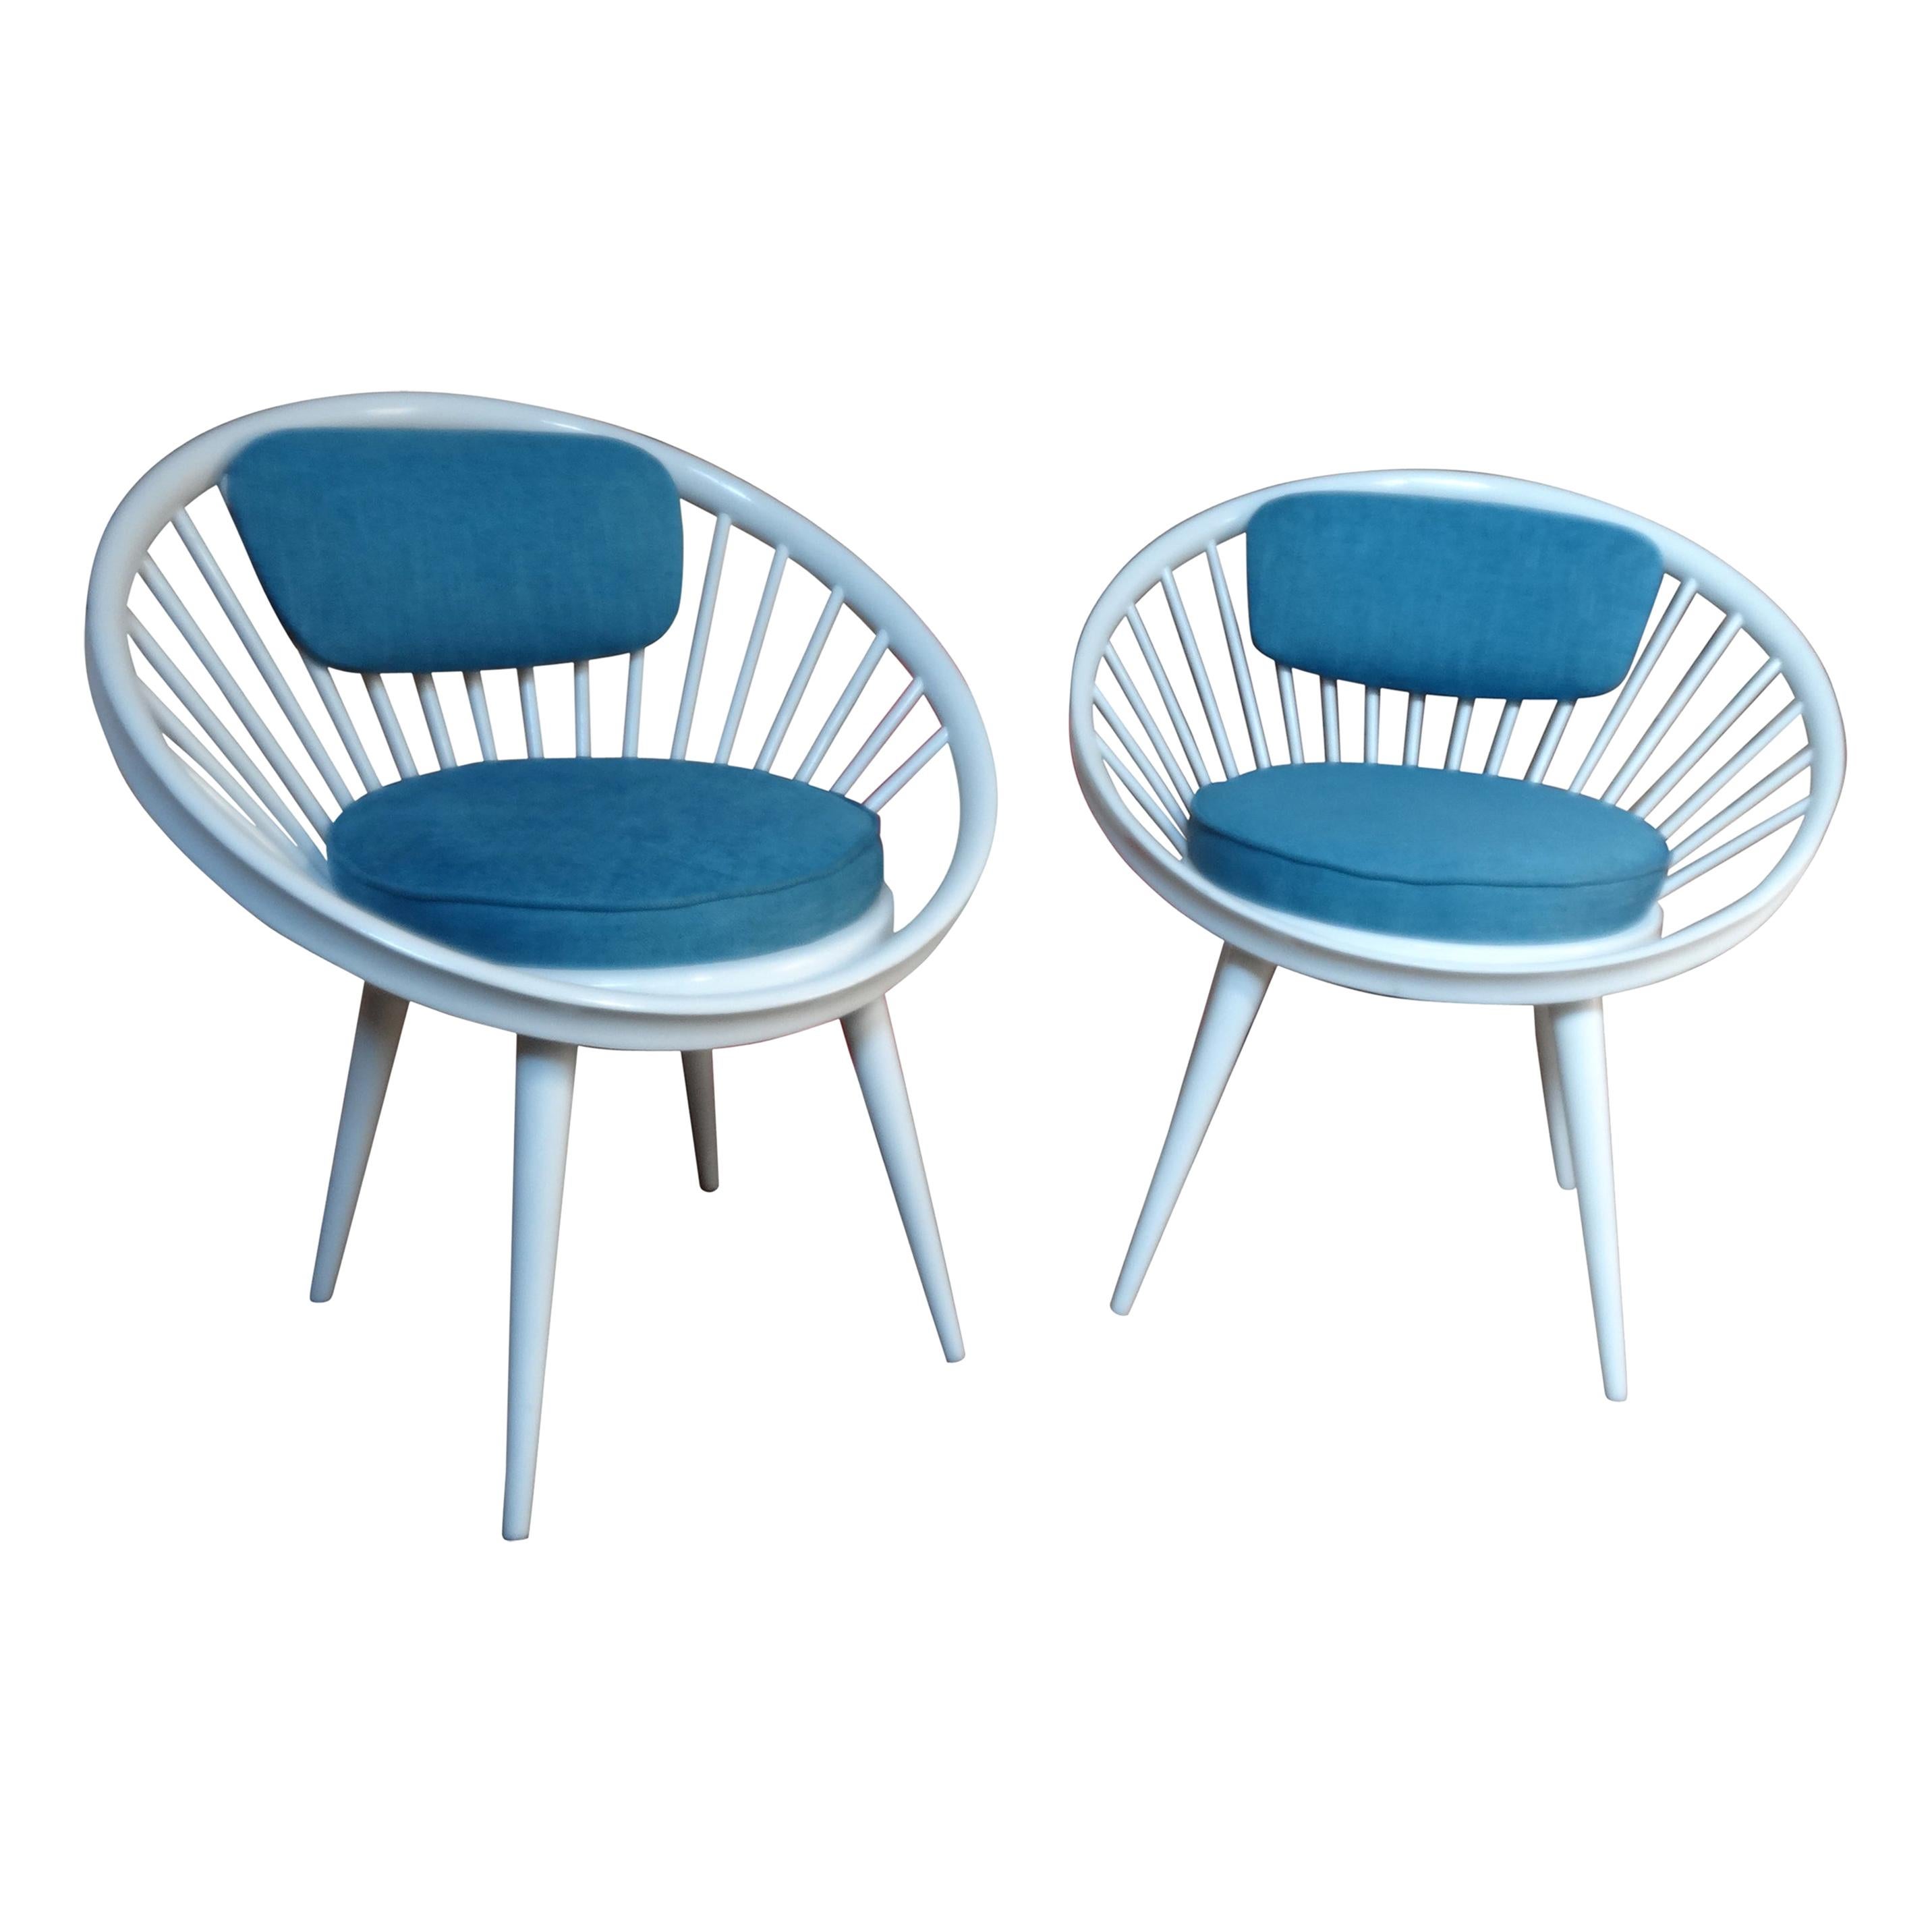 20th Century Yngve Ekström Designed for Swedese Retro 1960s Circle Chairs